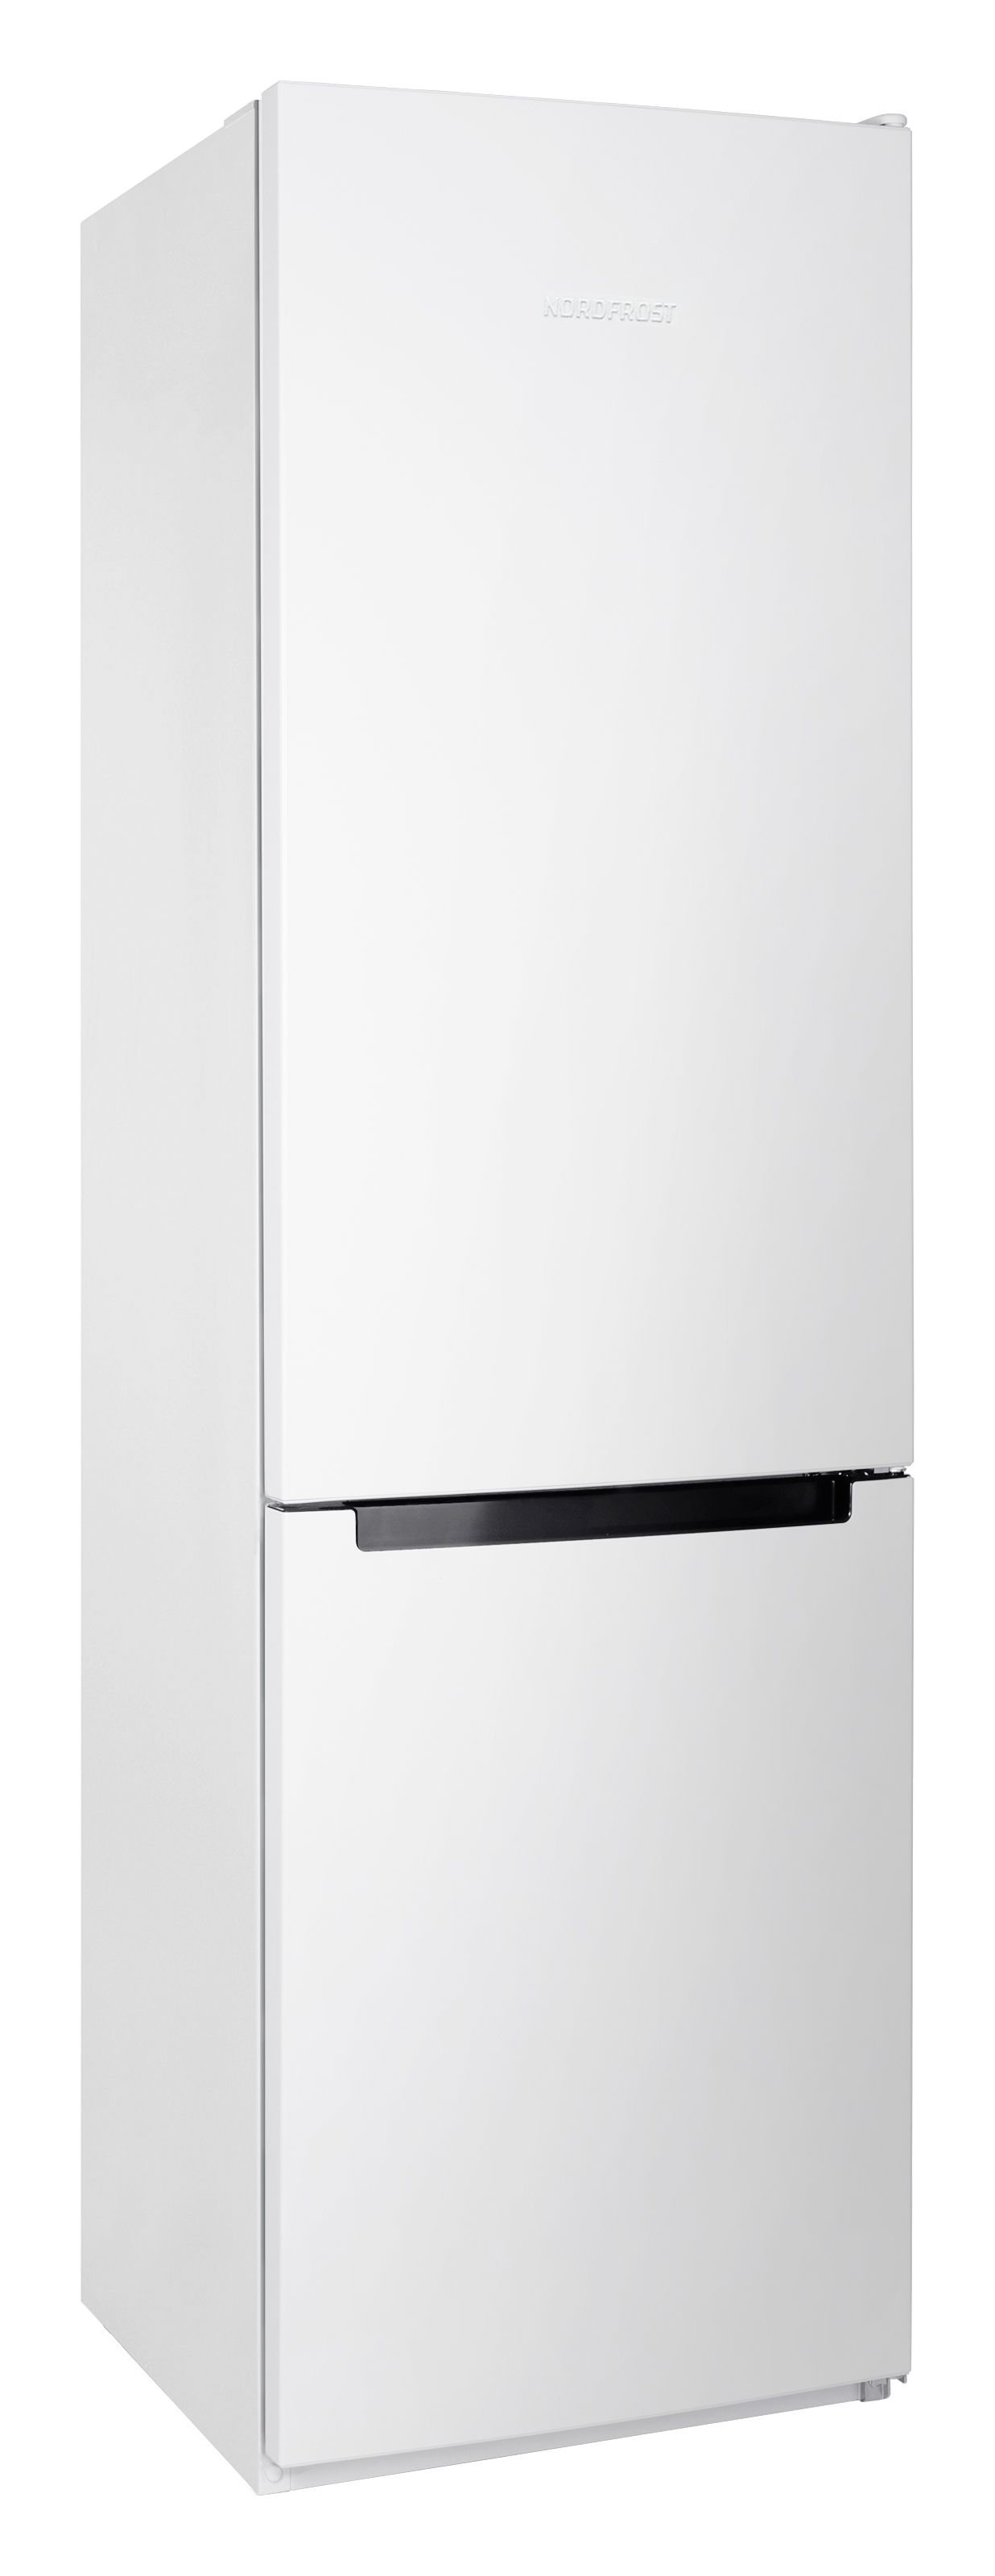 Холодильник NordFrost NRB 154 W белый двухкамерный холодильник nordfrost nrb 121 s